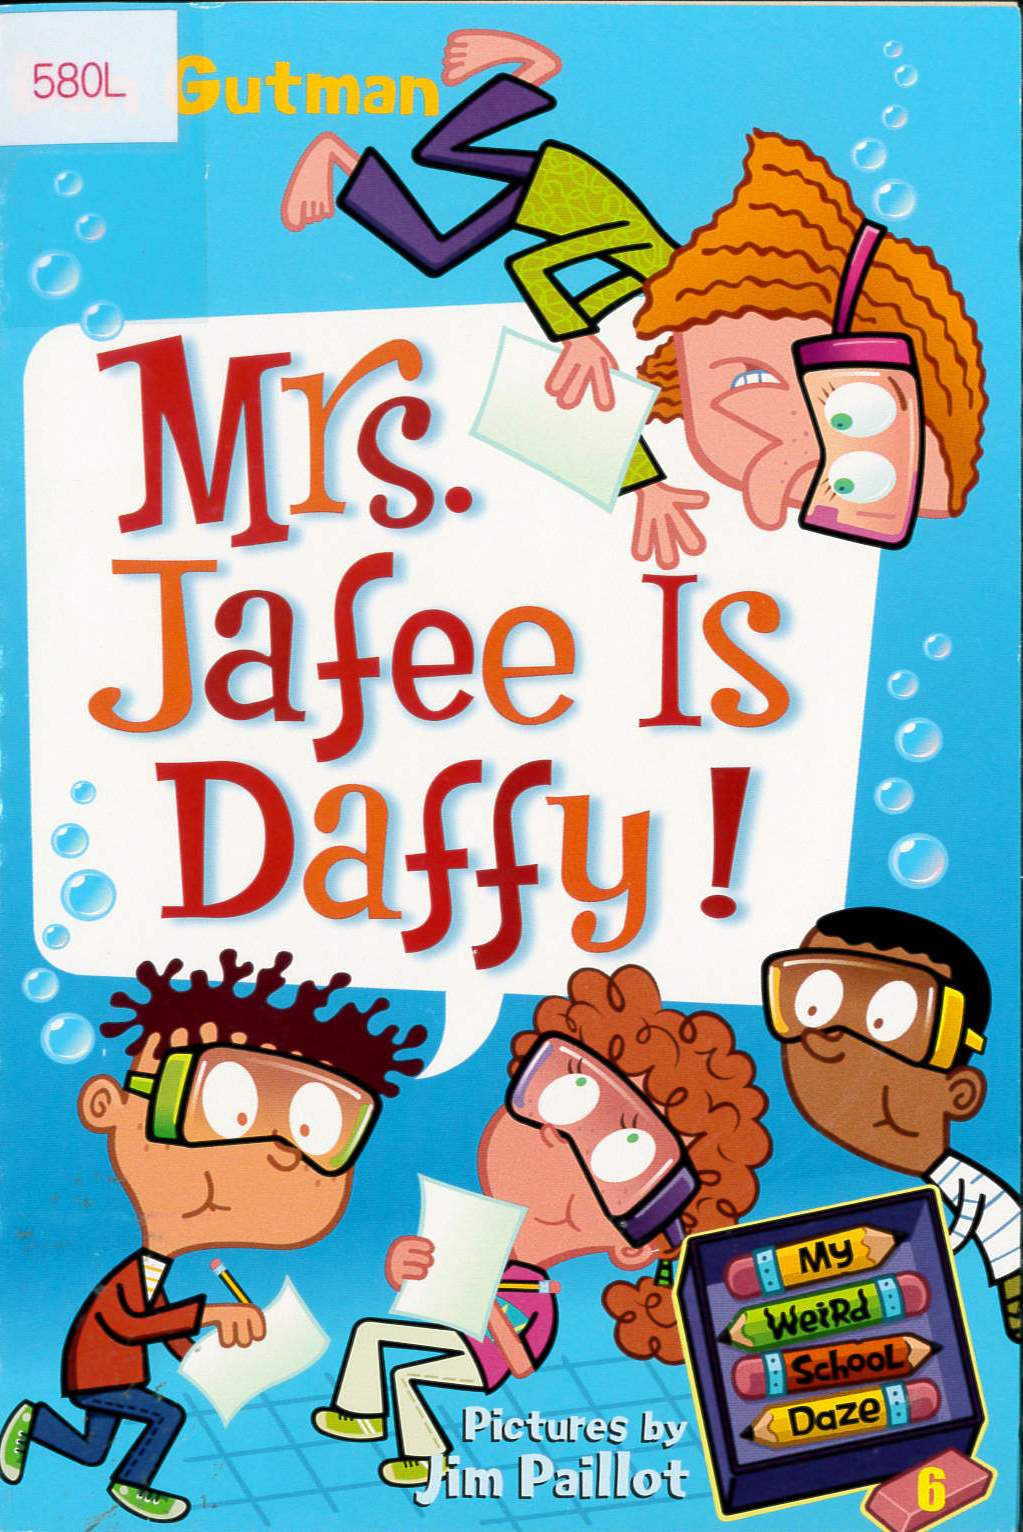 Mrs. Jafee is daffy! /